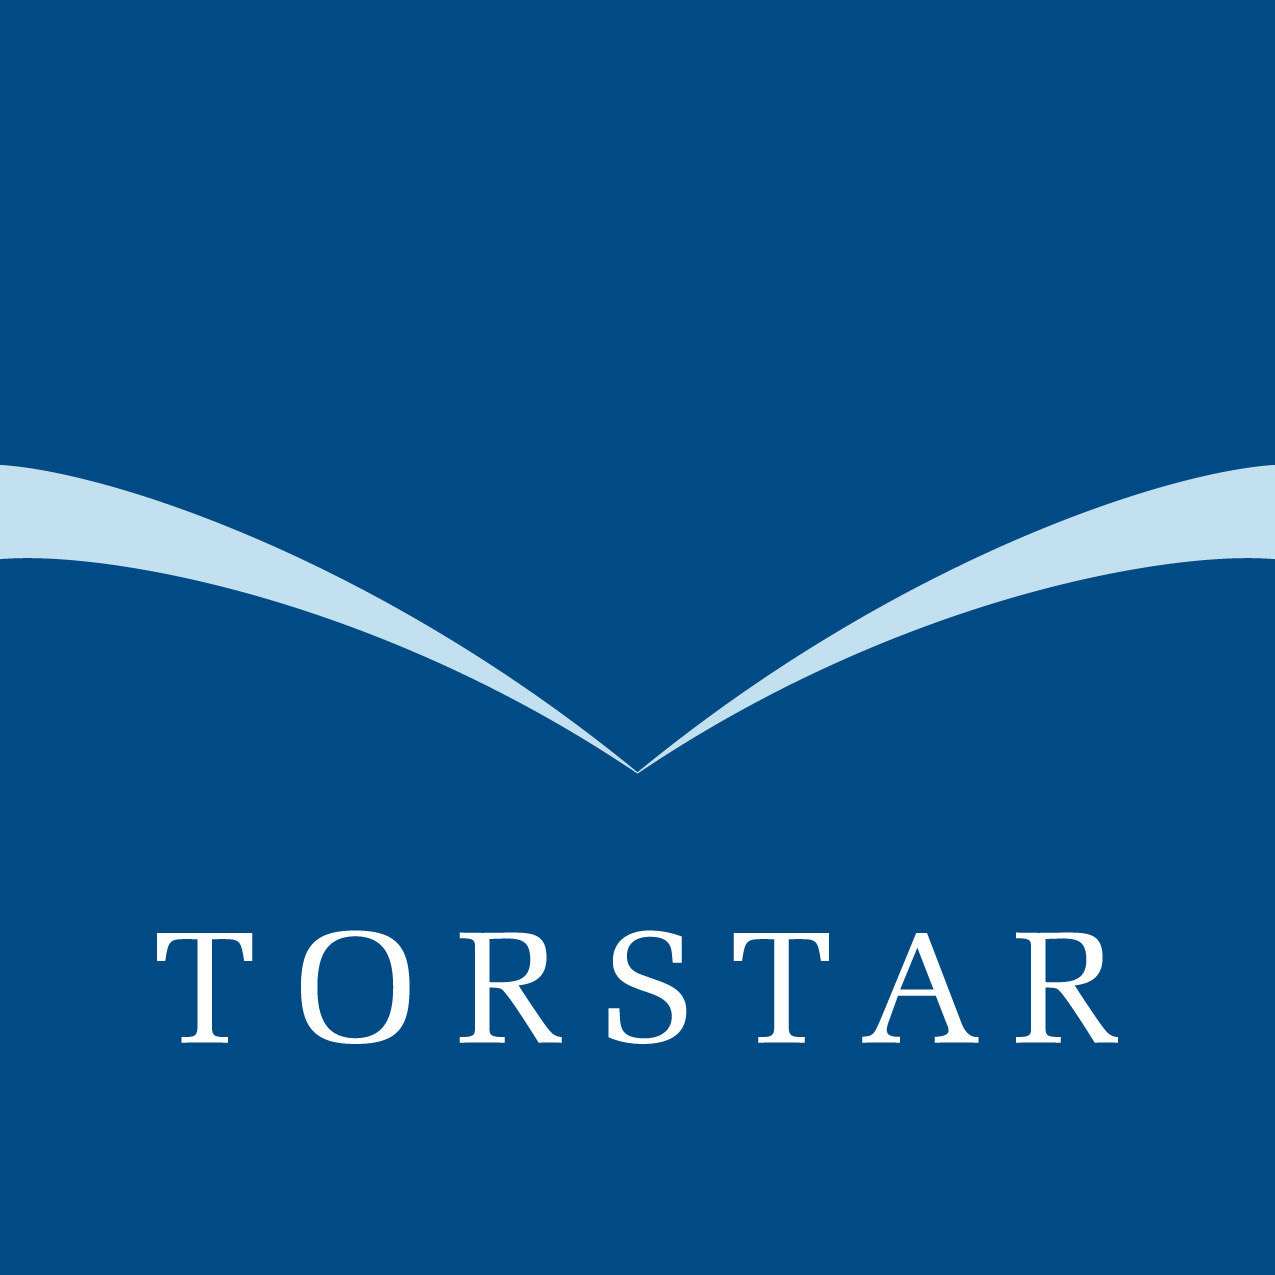 Torstar poised to acquire digital news site iPolitics